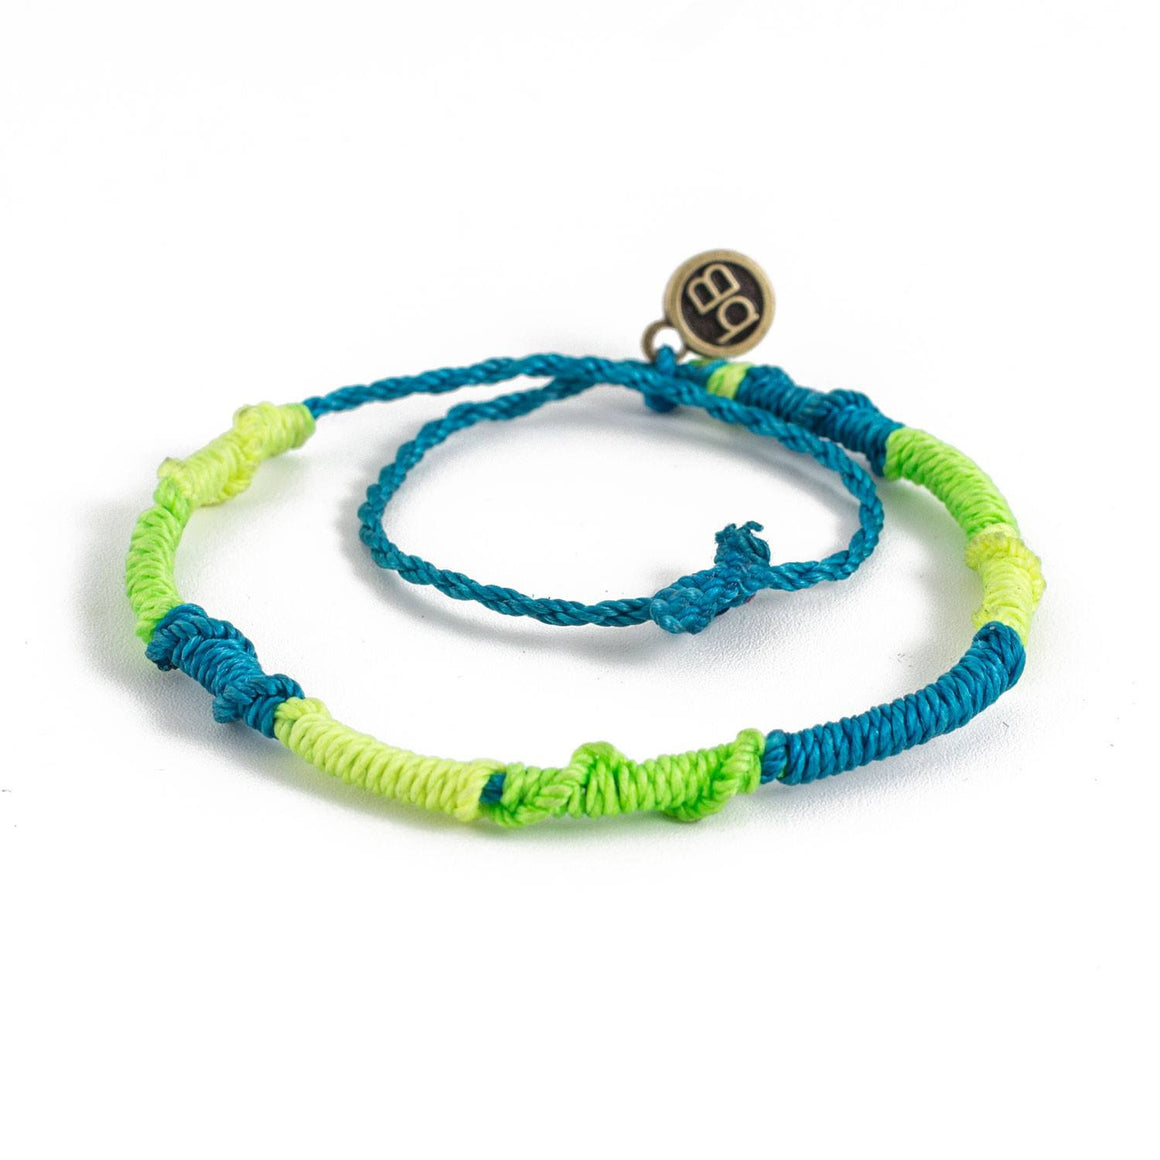 T'hiti Ocean Blue beach bracelets cover